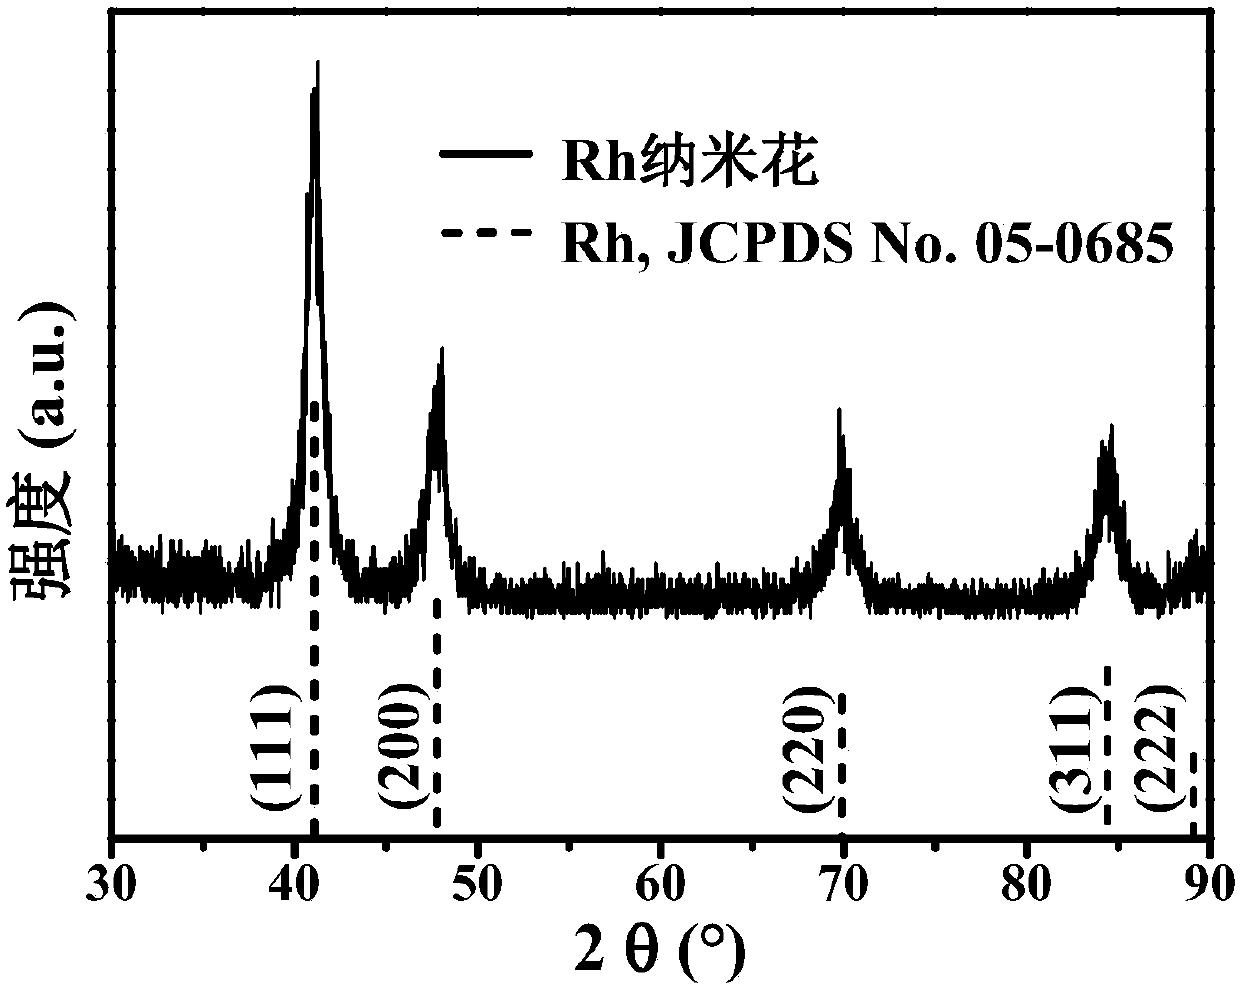 A preparation method of rh nanoflower electrocatalyst for alkaline direct methanol fuel cell